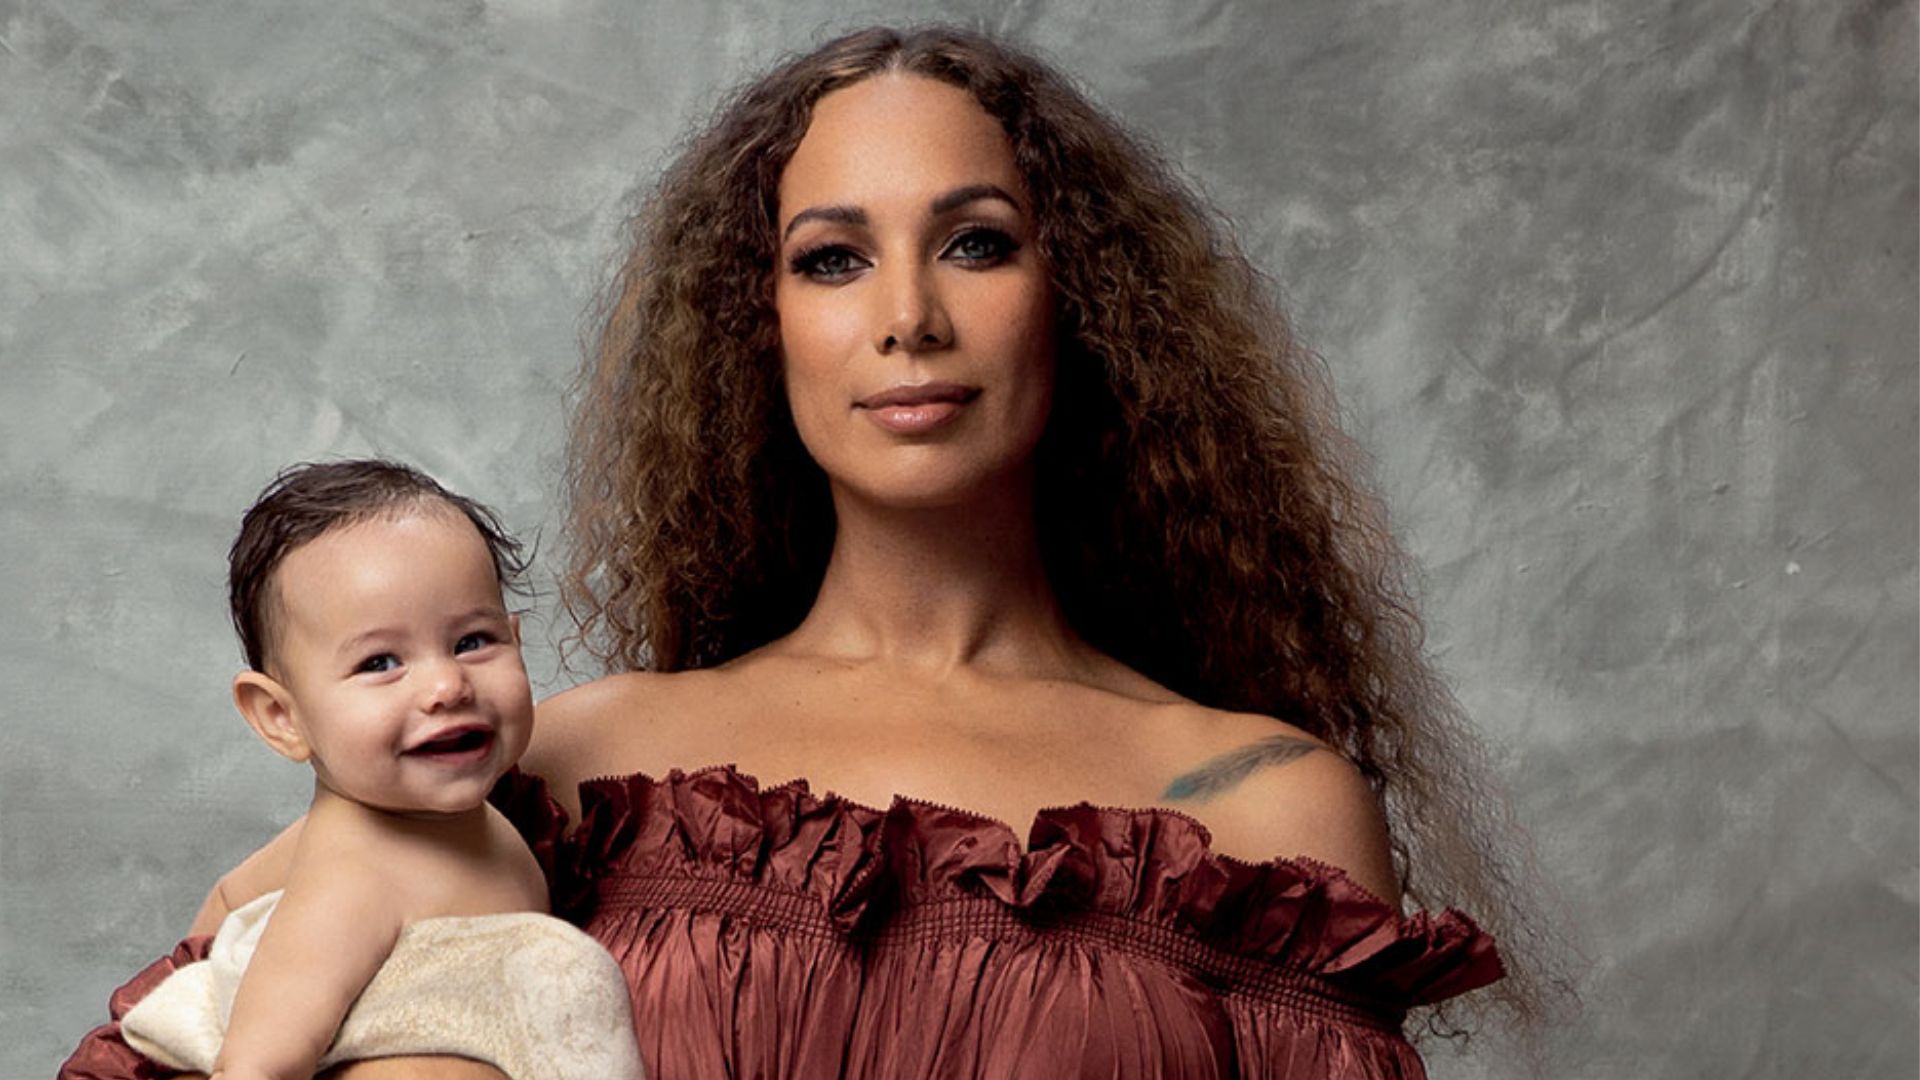 Leona Lewis With Her Newborn Daughter